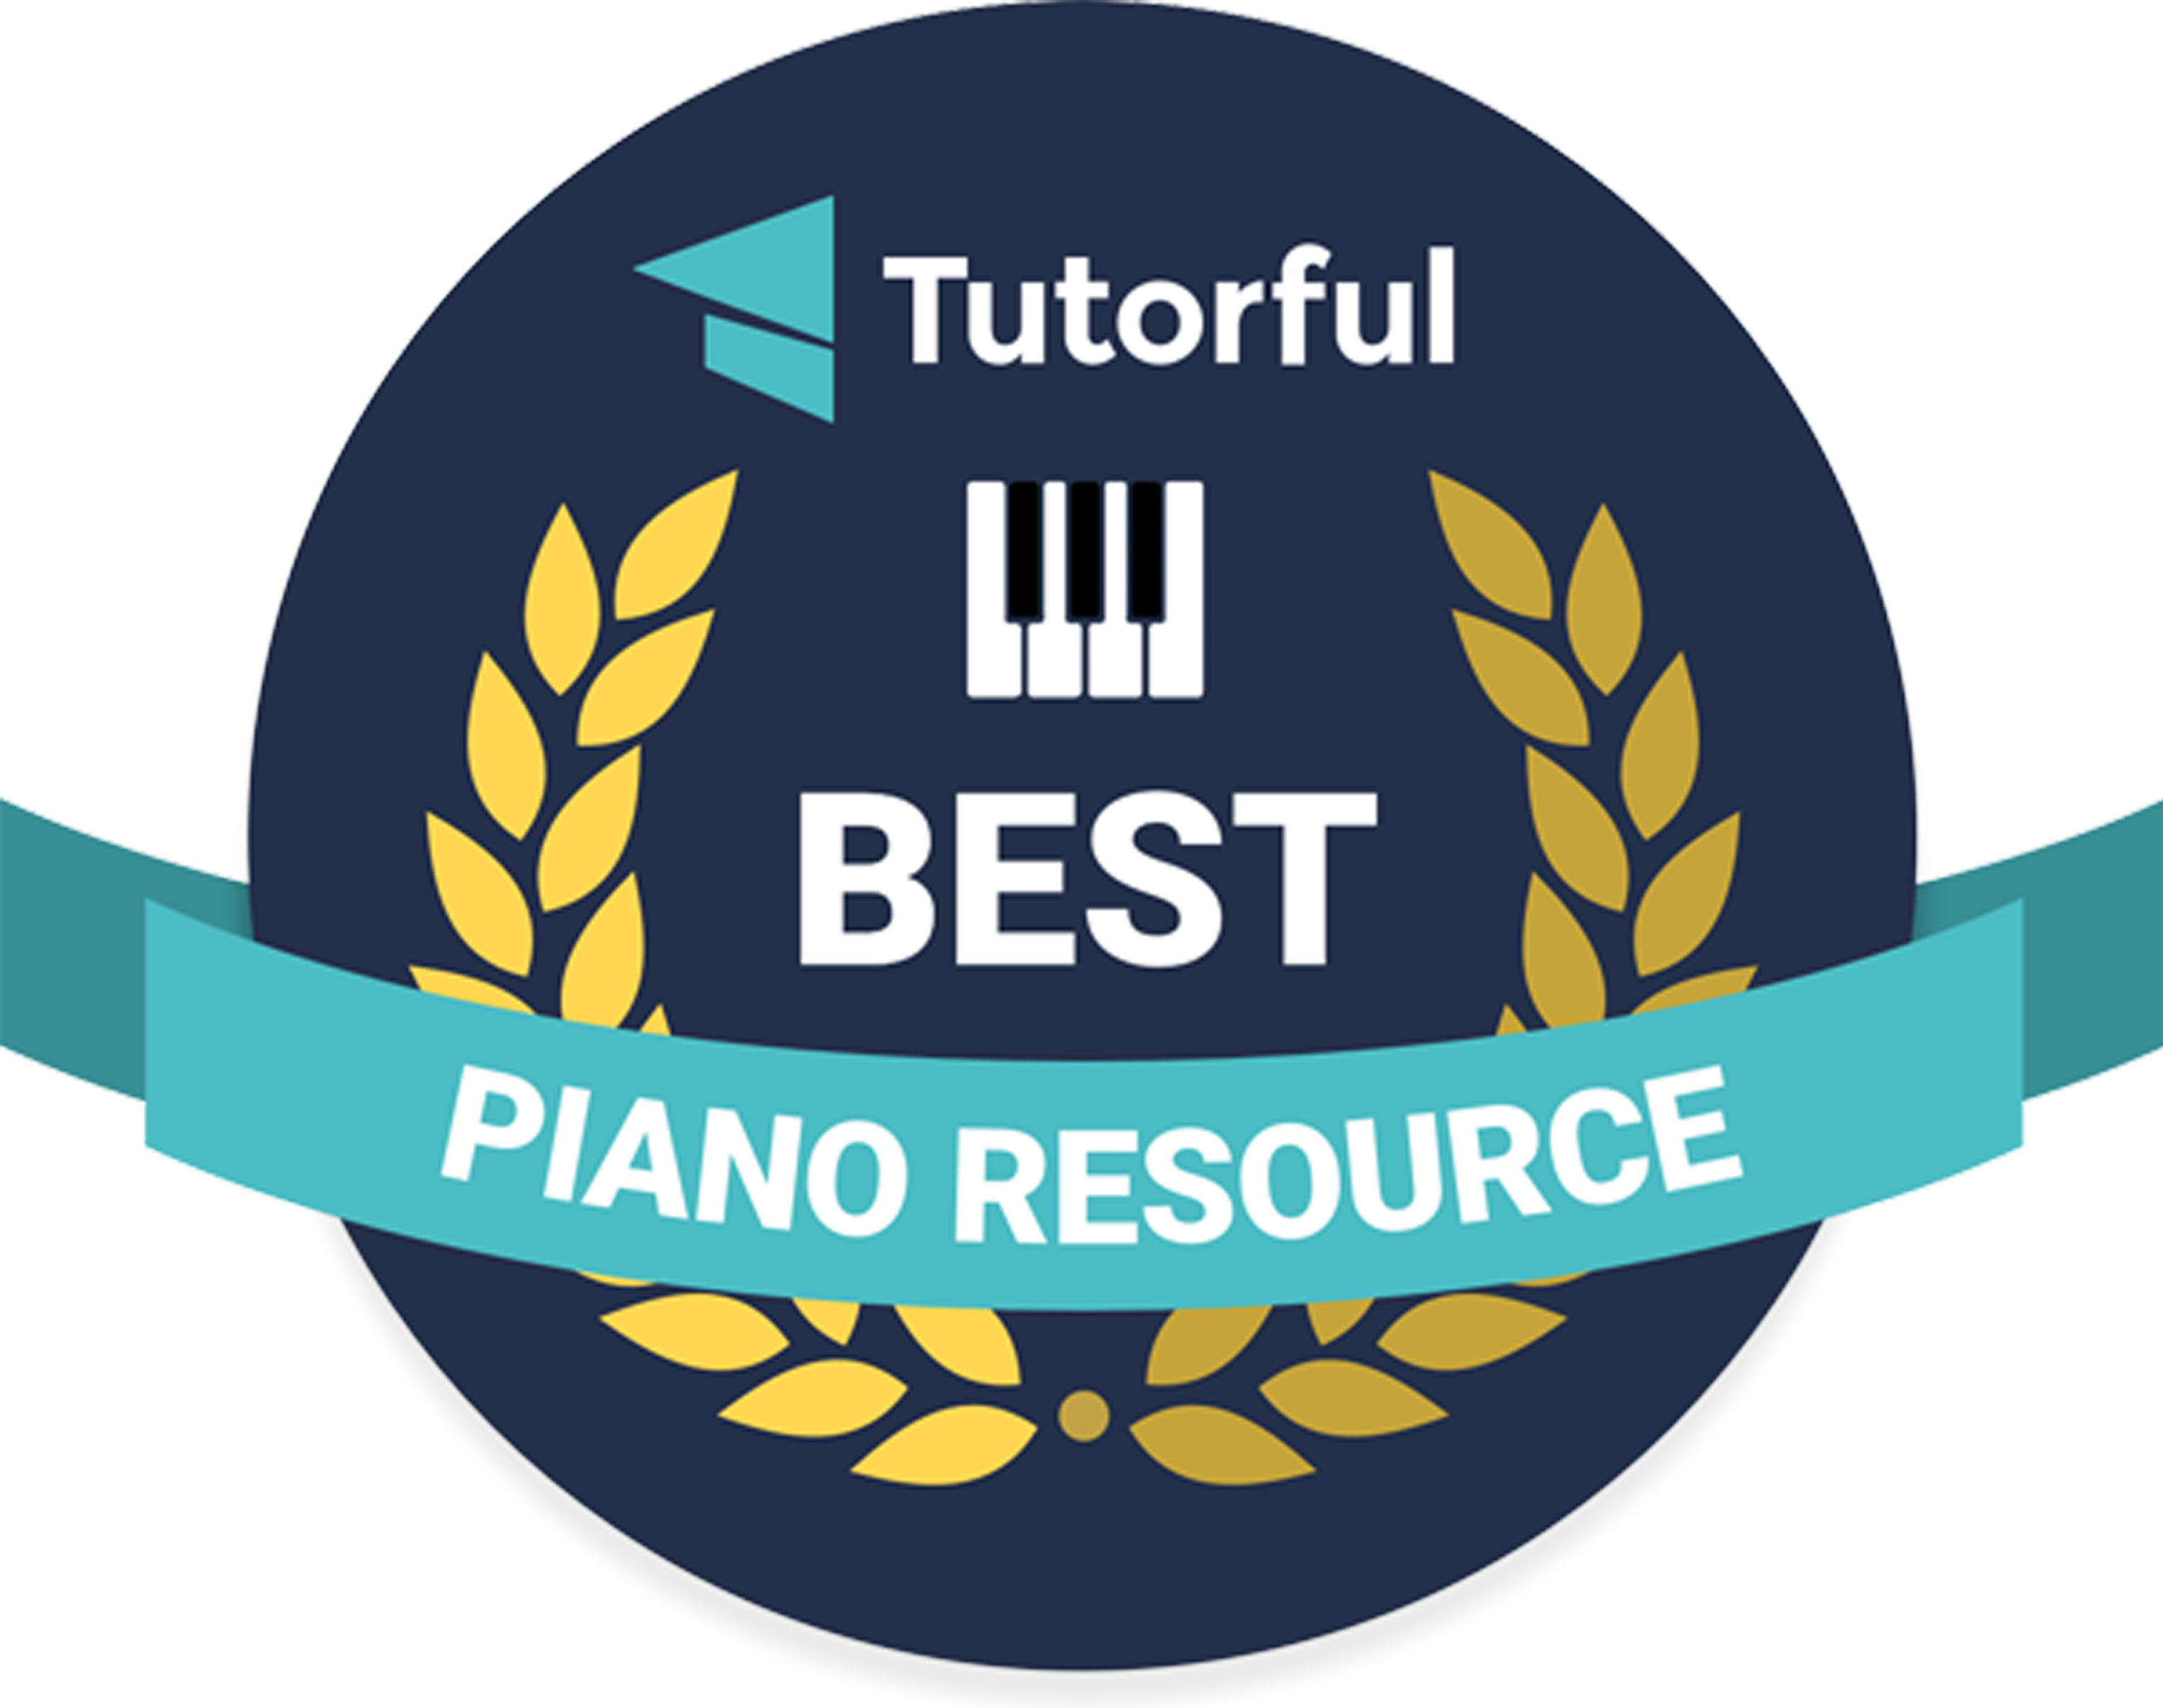 Tutorful best piano resource